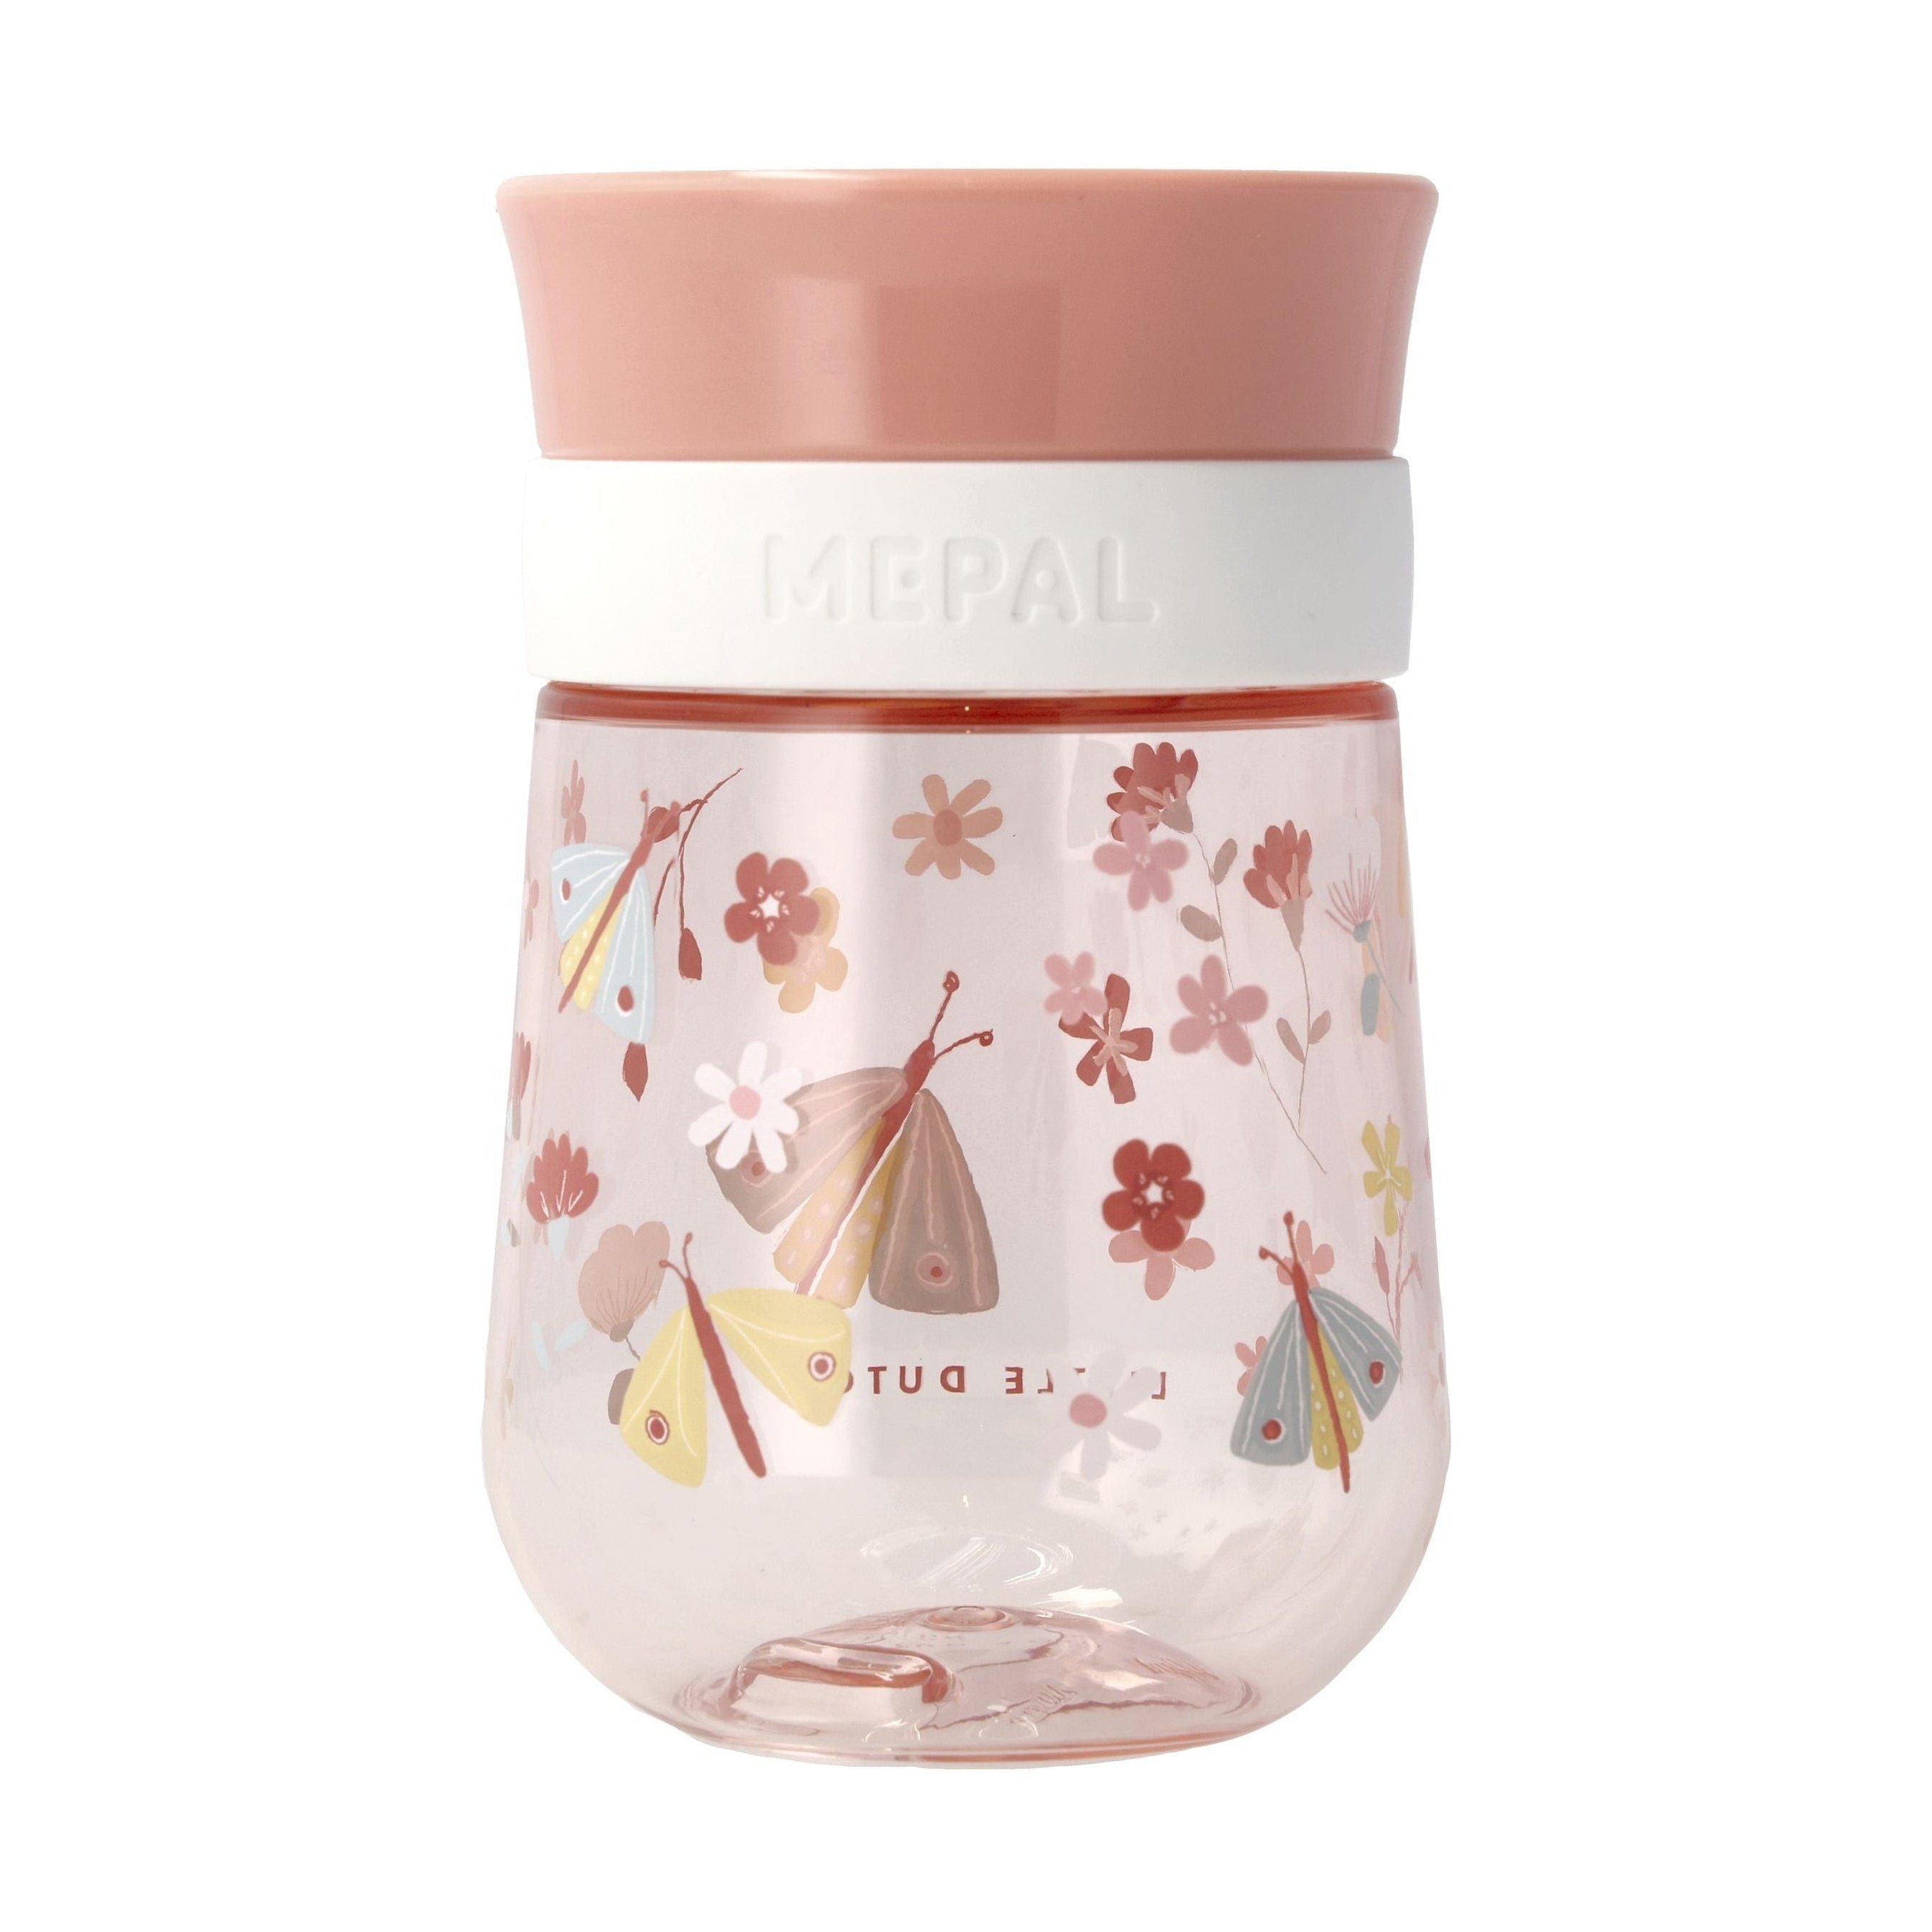 Mepal Mio Non Drip Baby Cup, Flowers & Futterflies